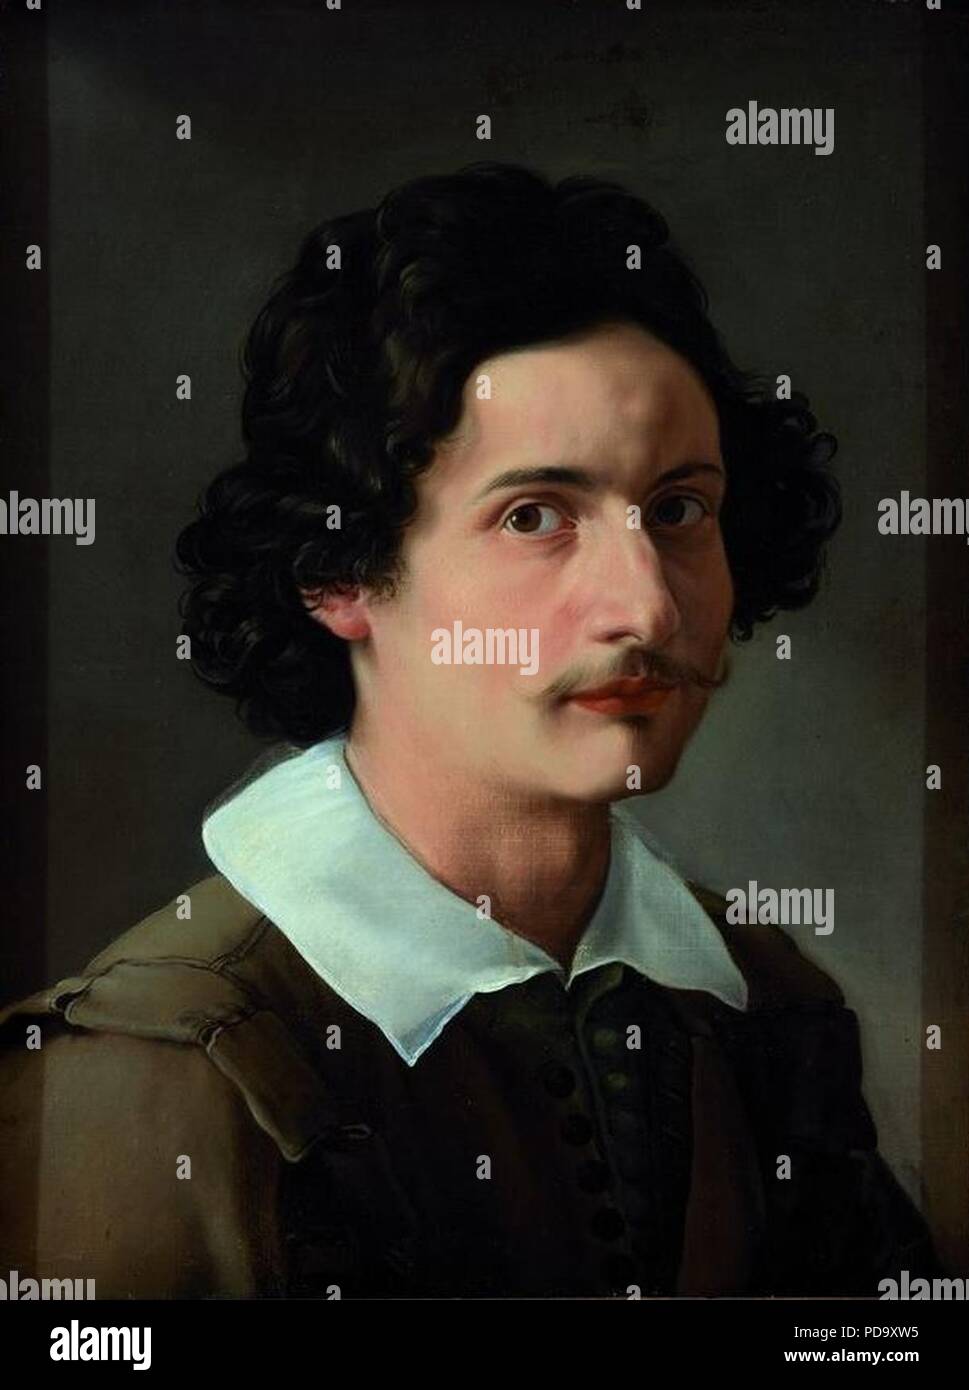 Angelo Caroselli - Portrait of a man Stock Photo - Alamy